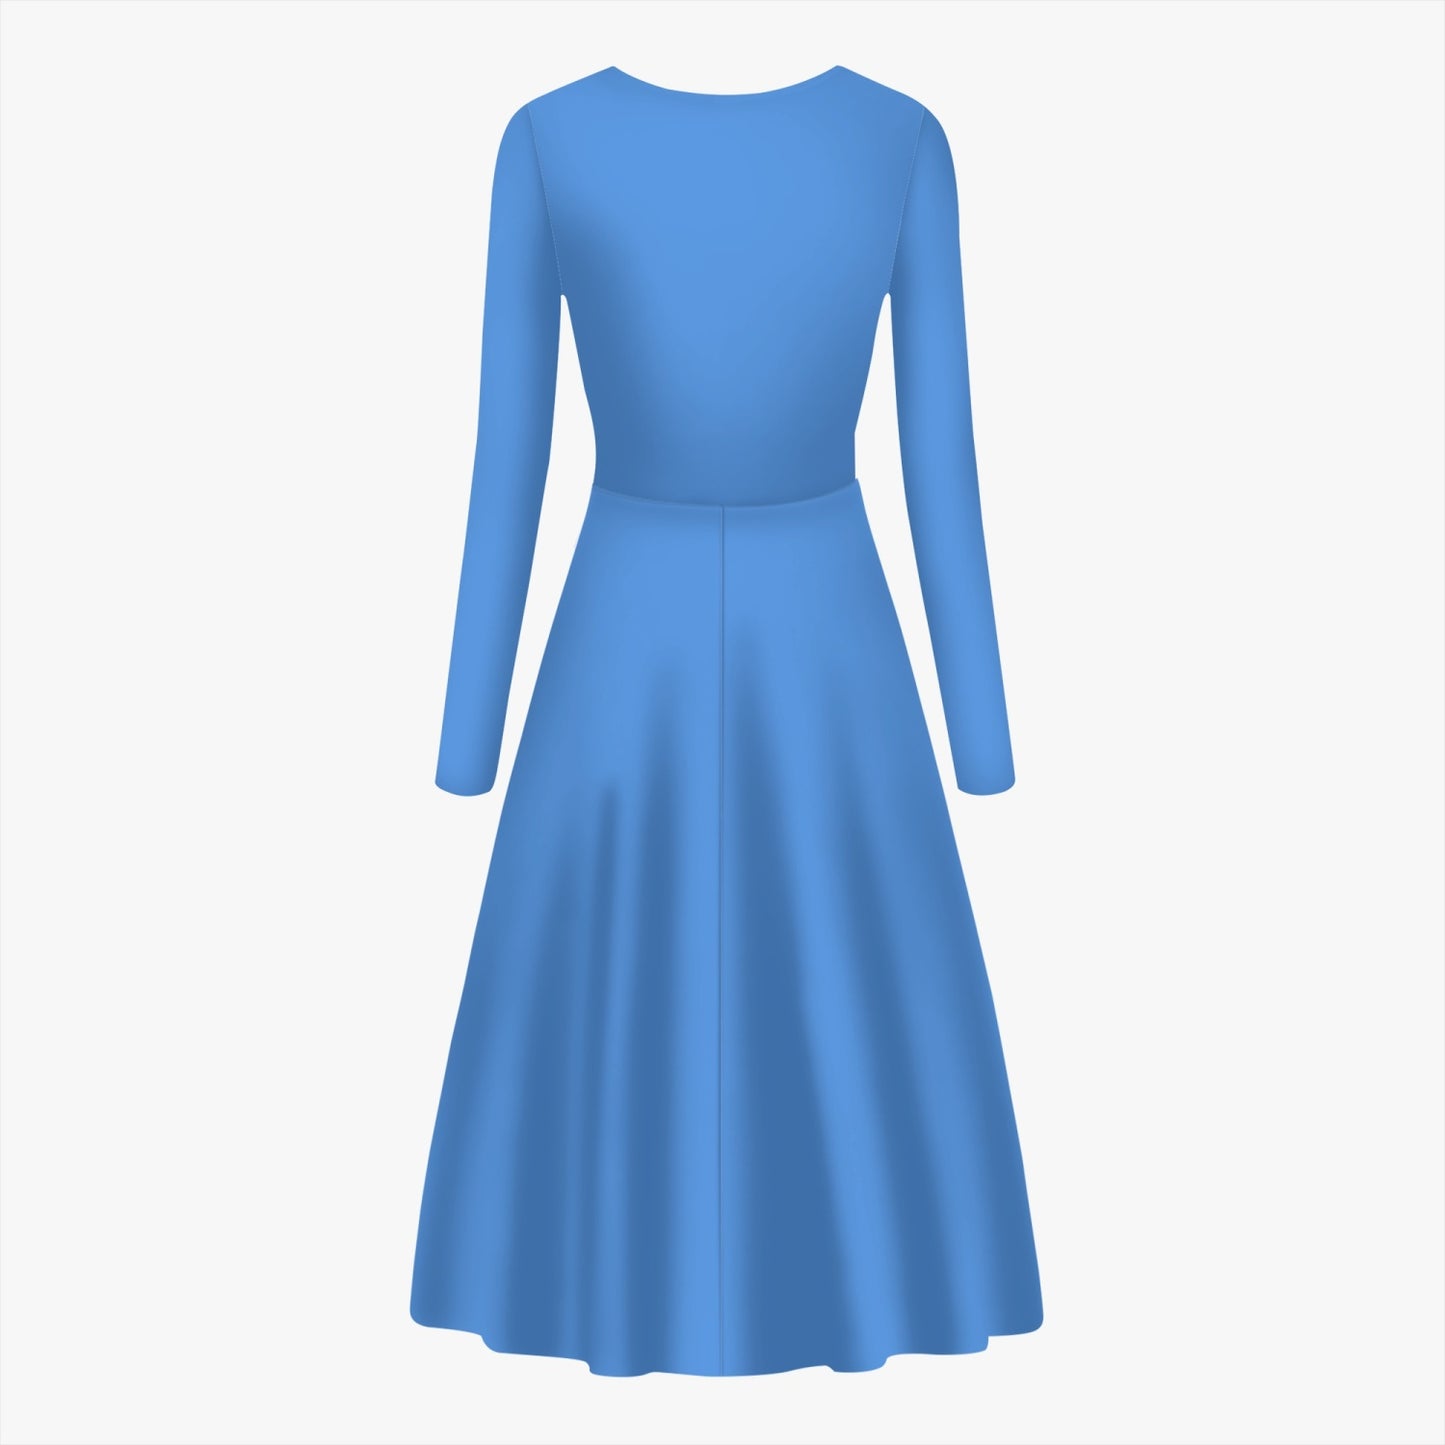 ANSWERED PRAYER PARTNERSHIP Women's Long-Sleeve One-piece Dress